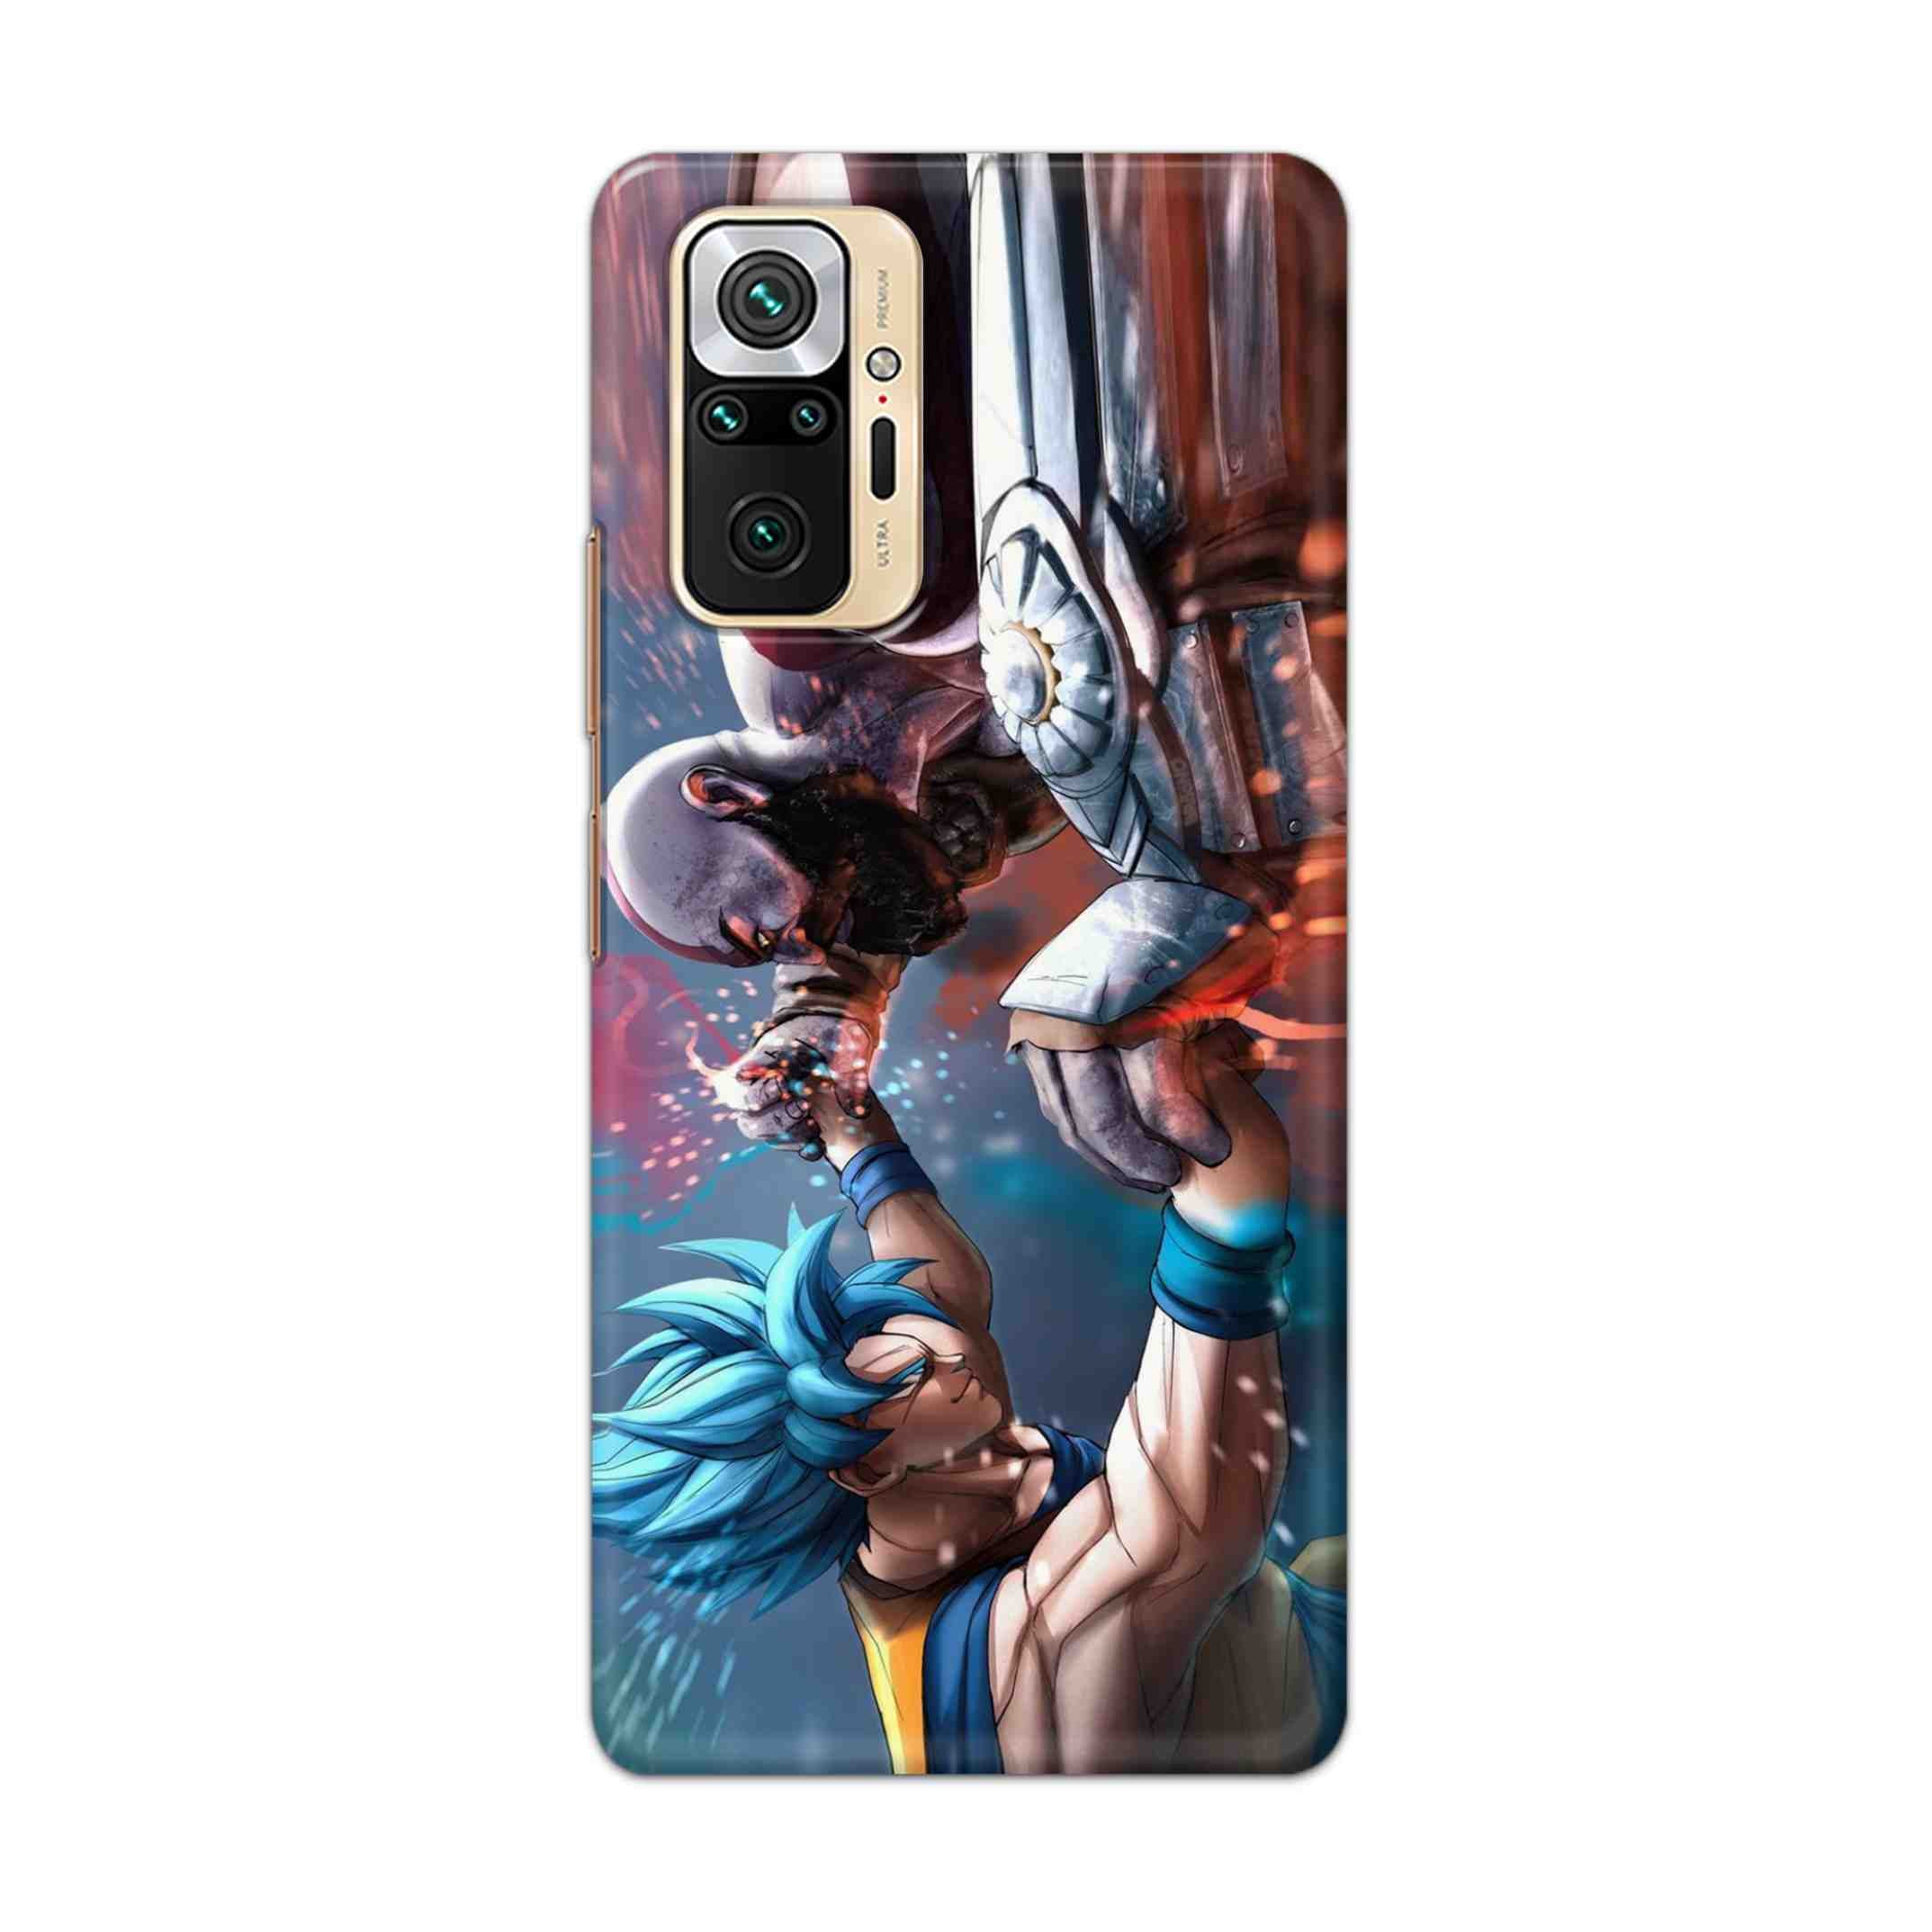 Buy Goku Vs Kratos Hard Back Mobile Phone Case Cover For Redmi Note 10 Pro Online